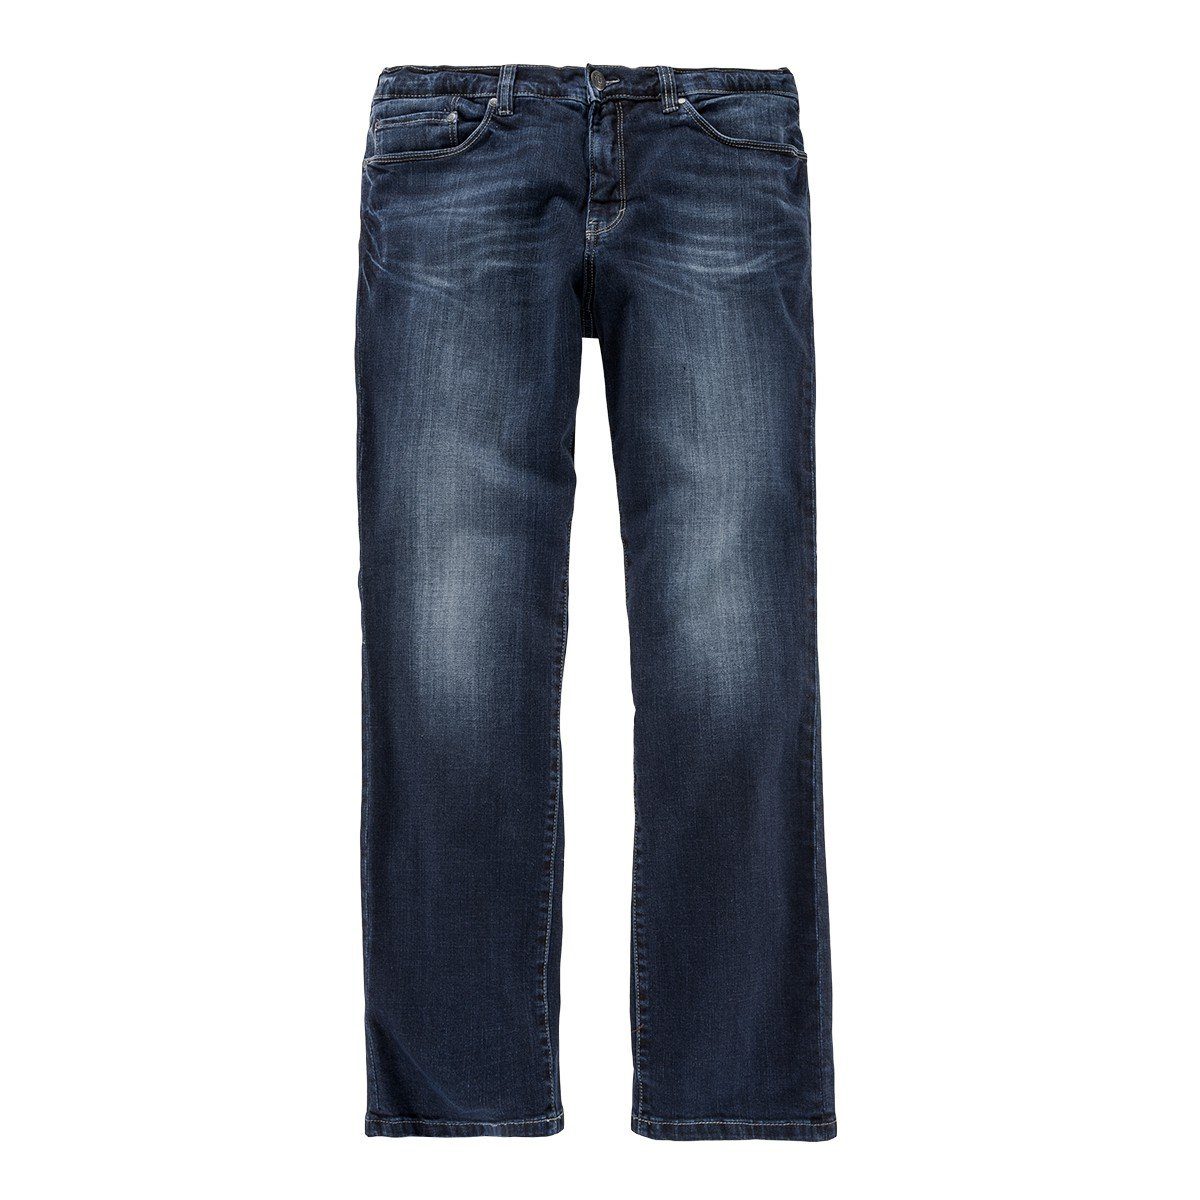 Paddock's Bequeme Jeans Übergrößen Paddock´s Jeans Ranger blue dark stone used